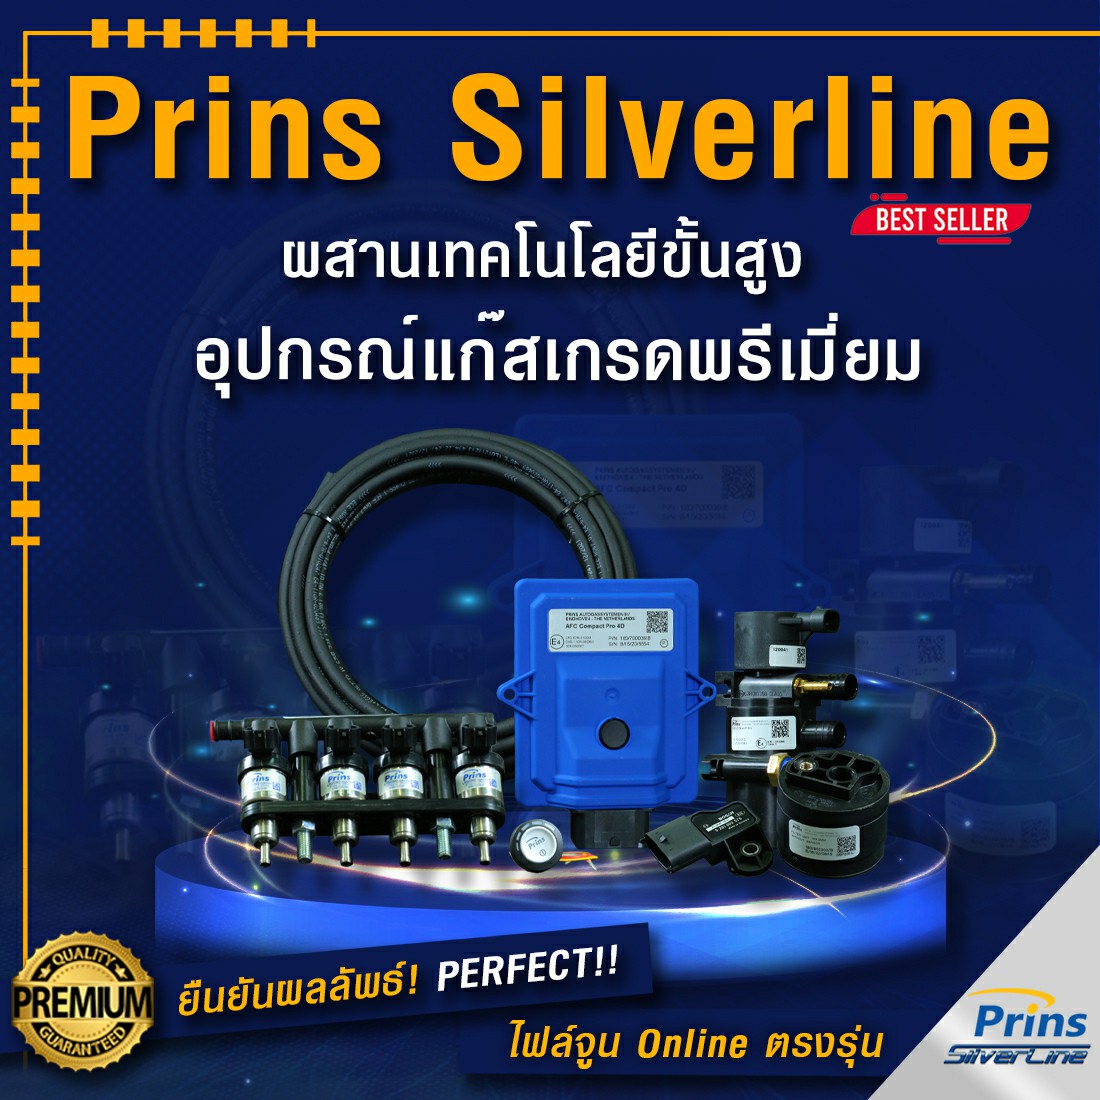 01 Prins Silverline ผสานเทคโนโลยีขั้นสูง อุปกรณ์ติดตั้งแก๊ส เกรดพรีเมียม~1